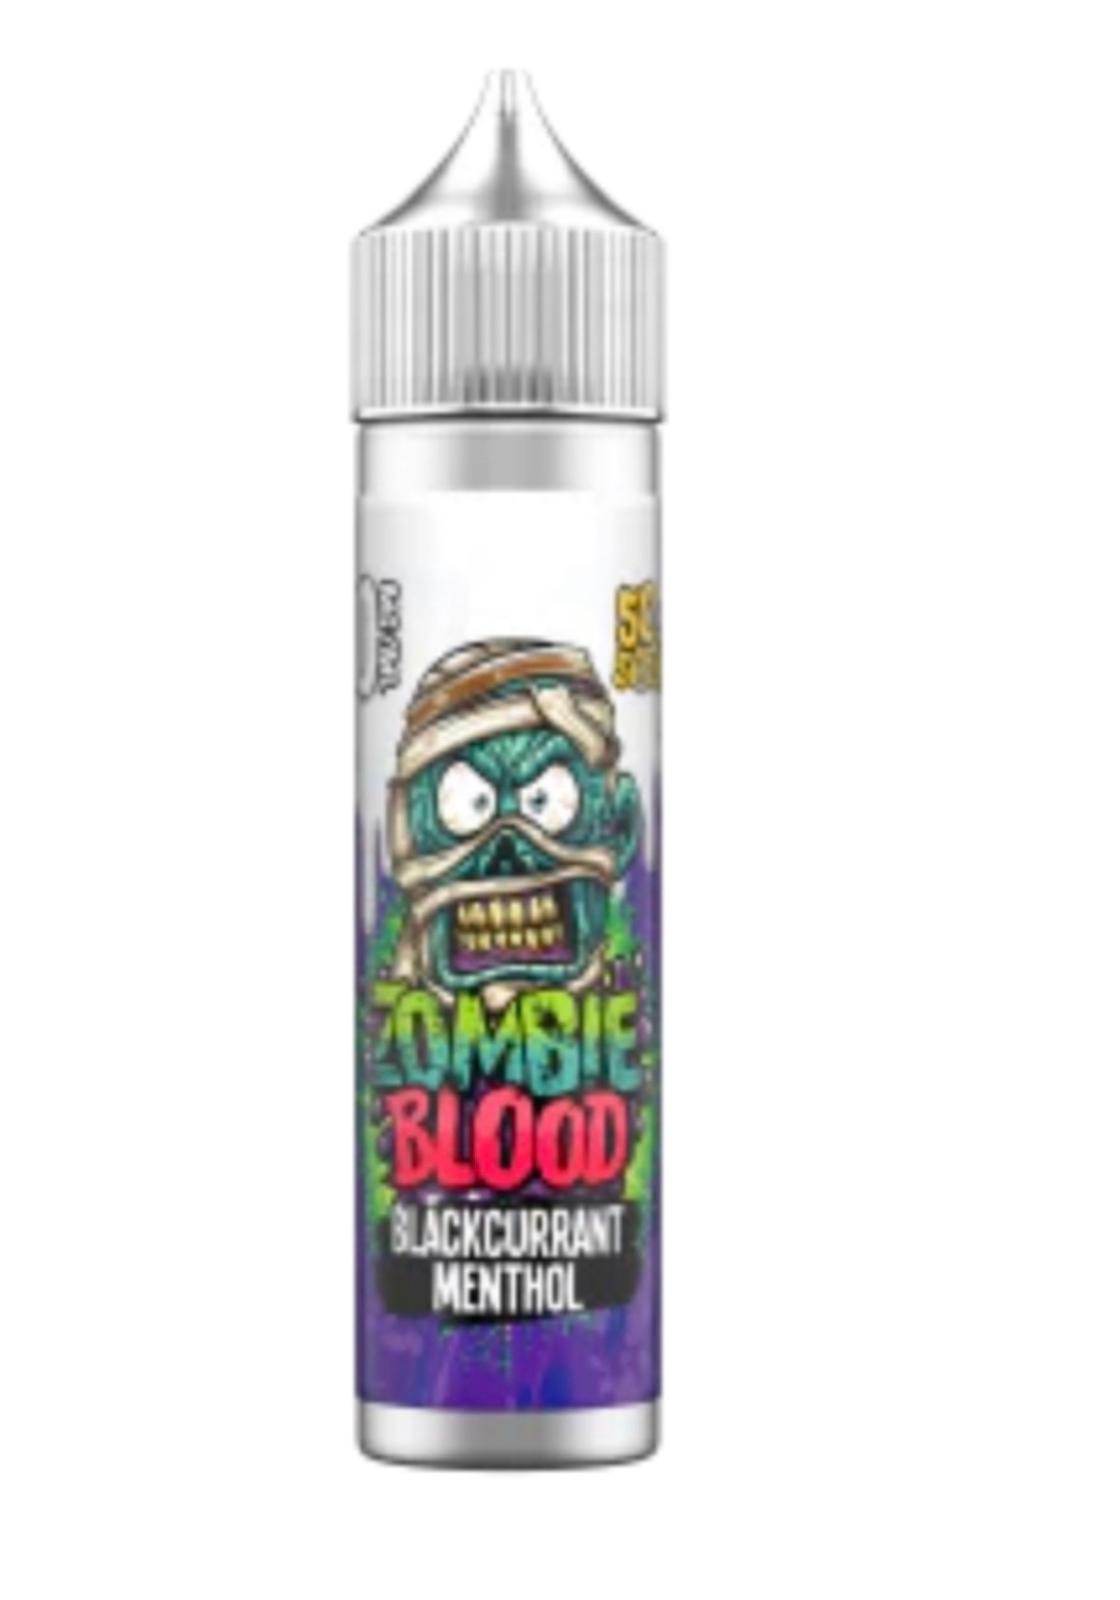 Blackcurrant Menthol Zombie Blood E-liquid 50ml Shortfill